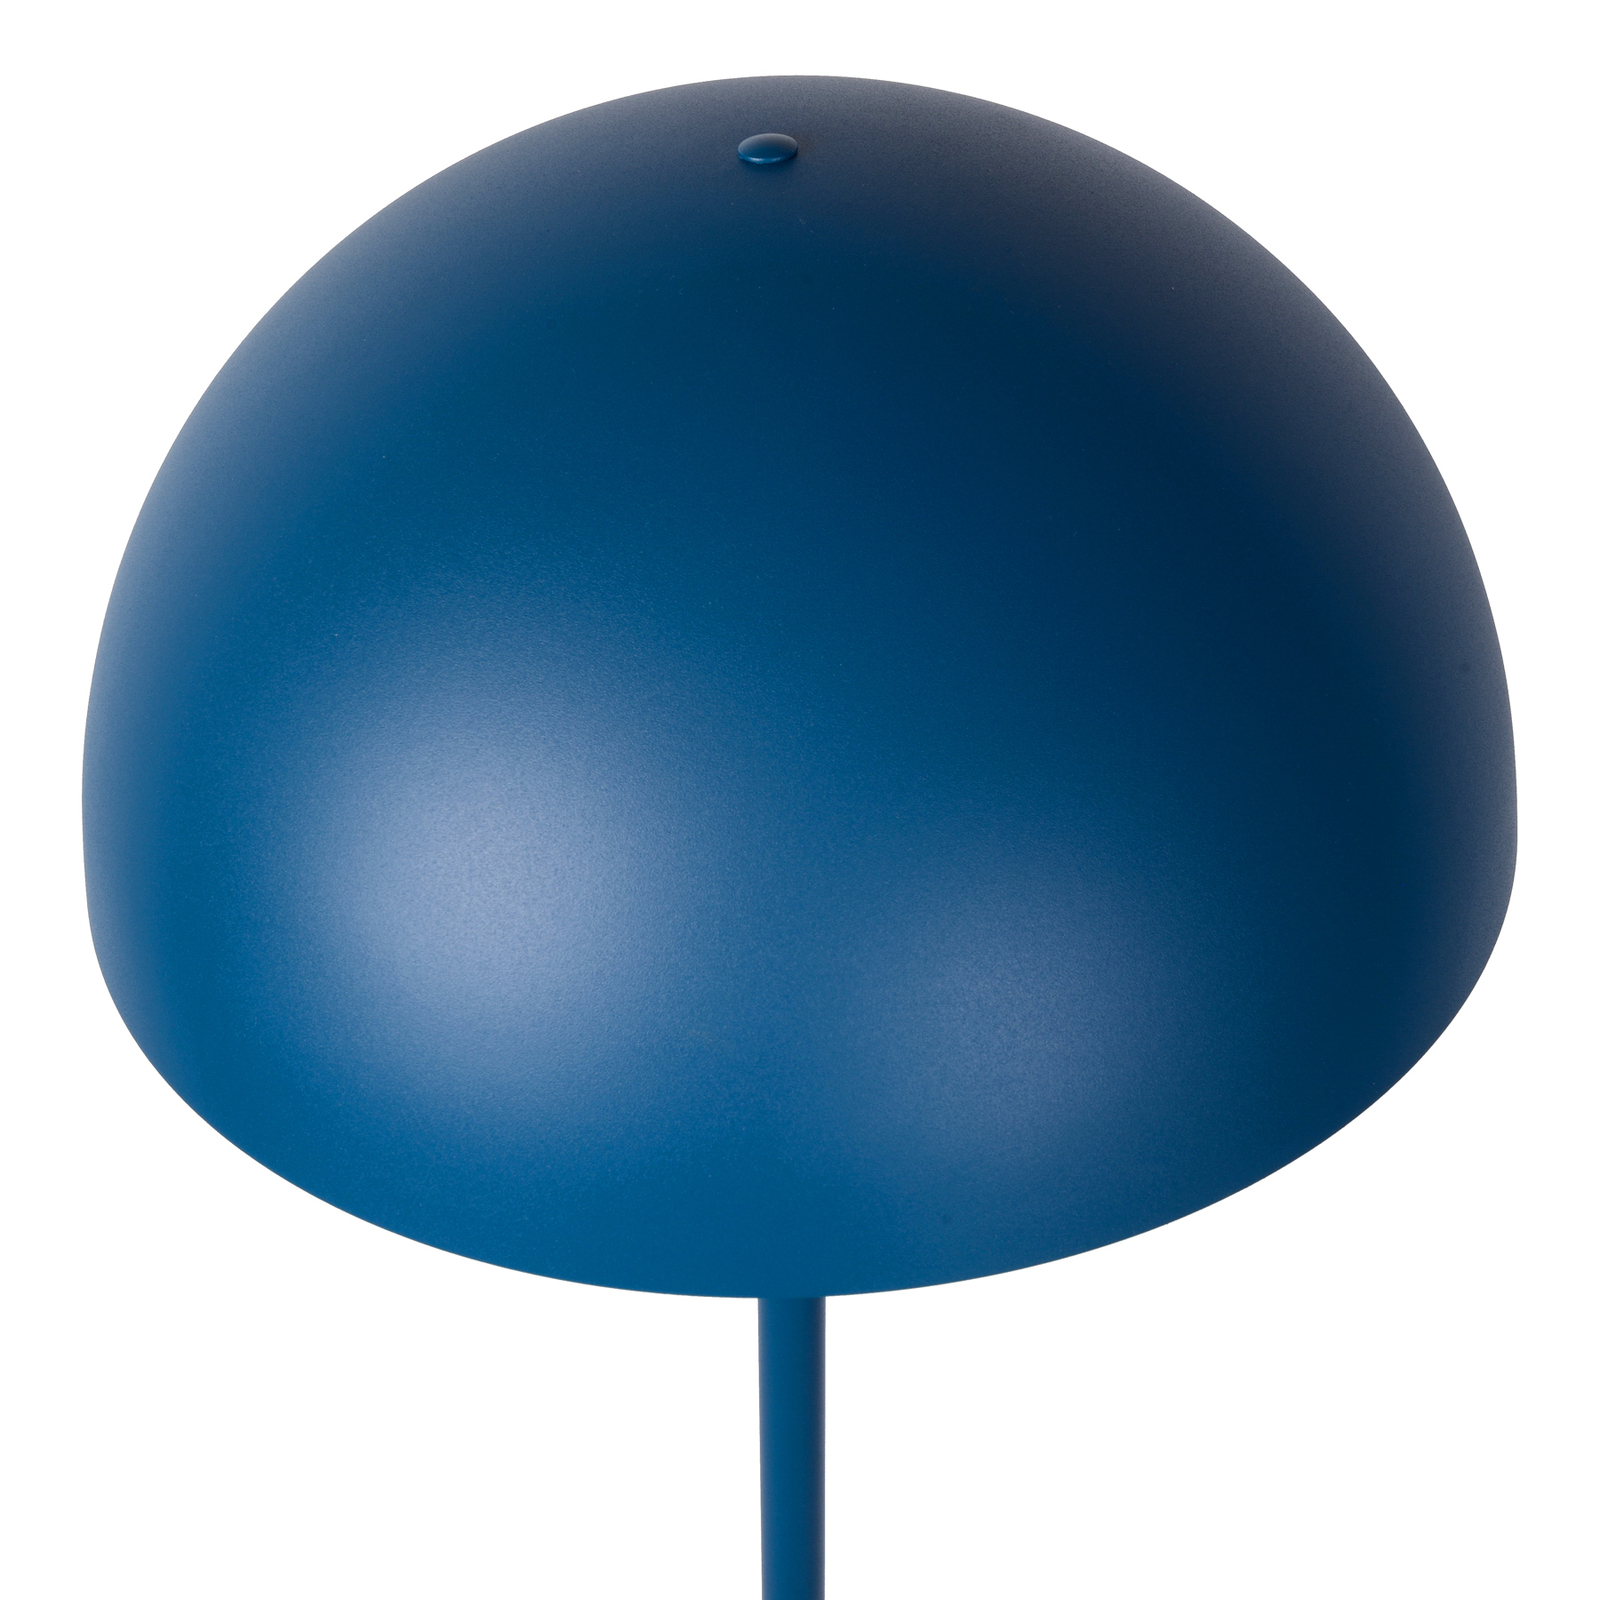 Стоманена подова лампа Siemon, Ø 35 cm, синя